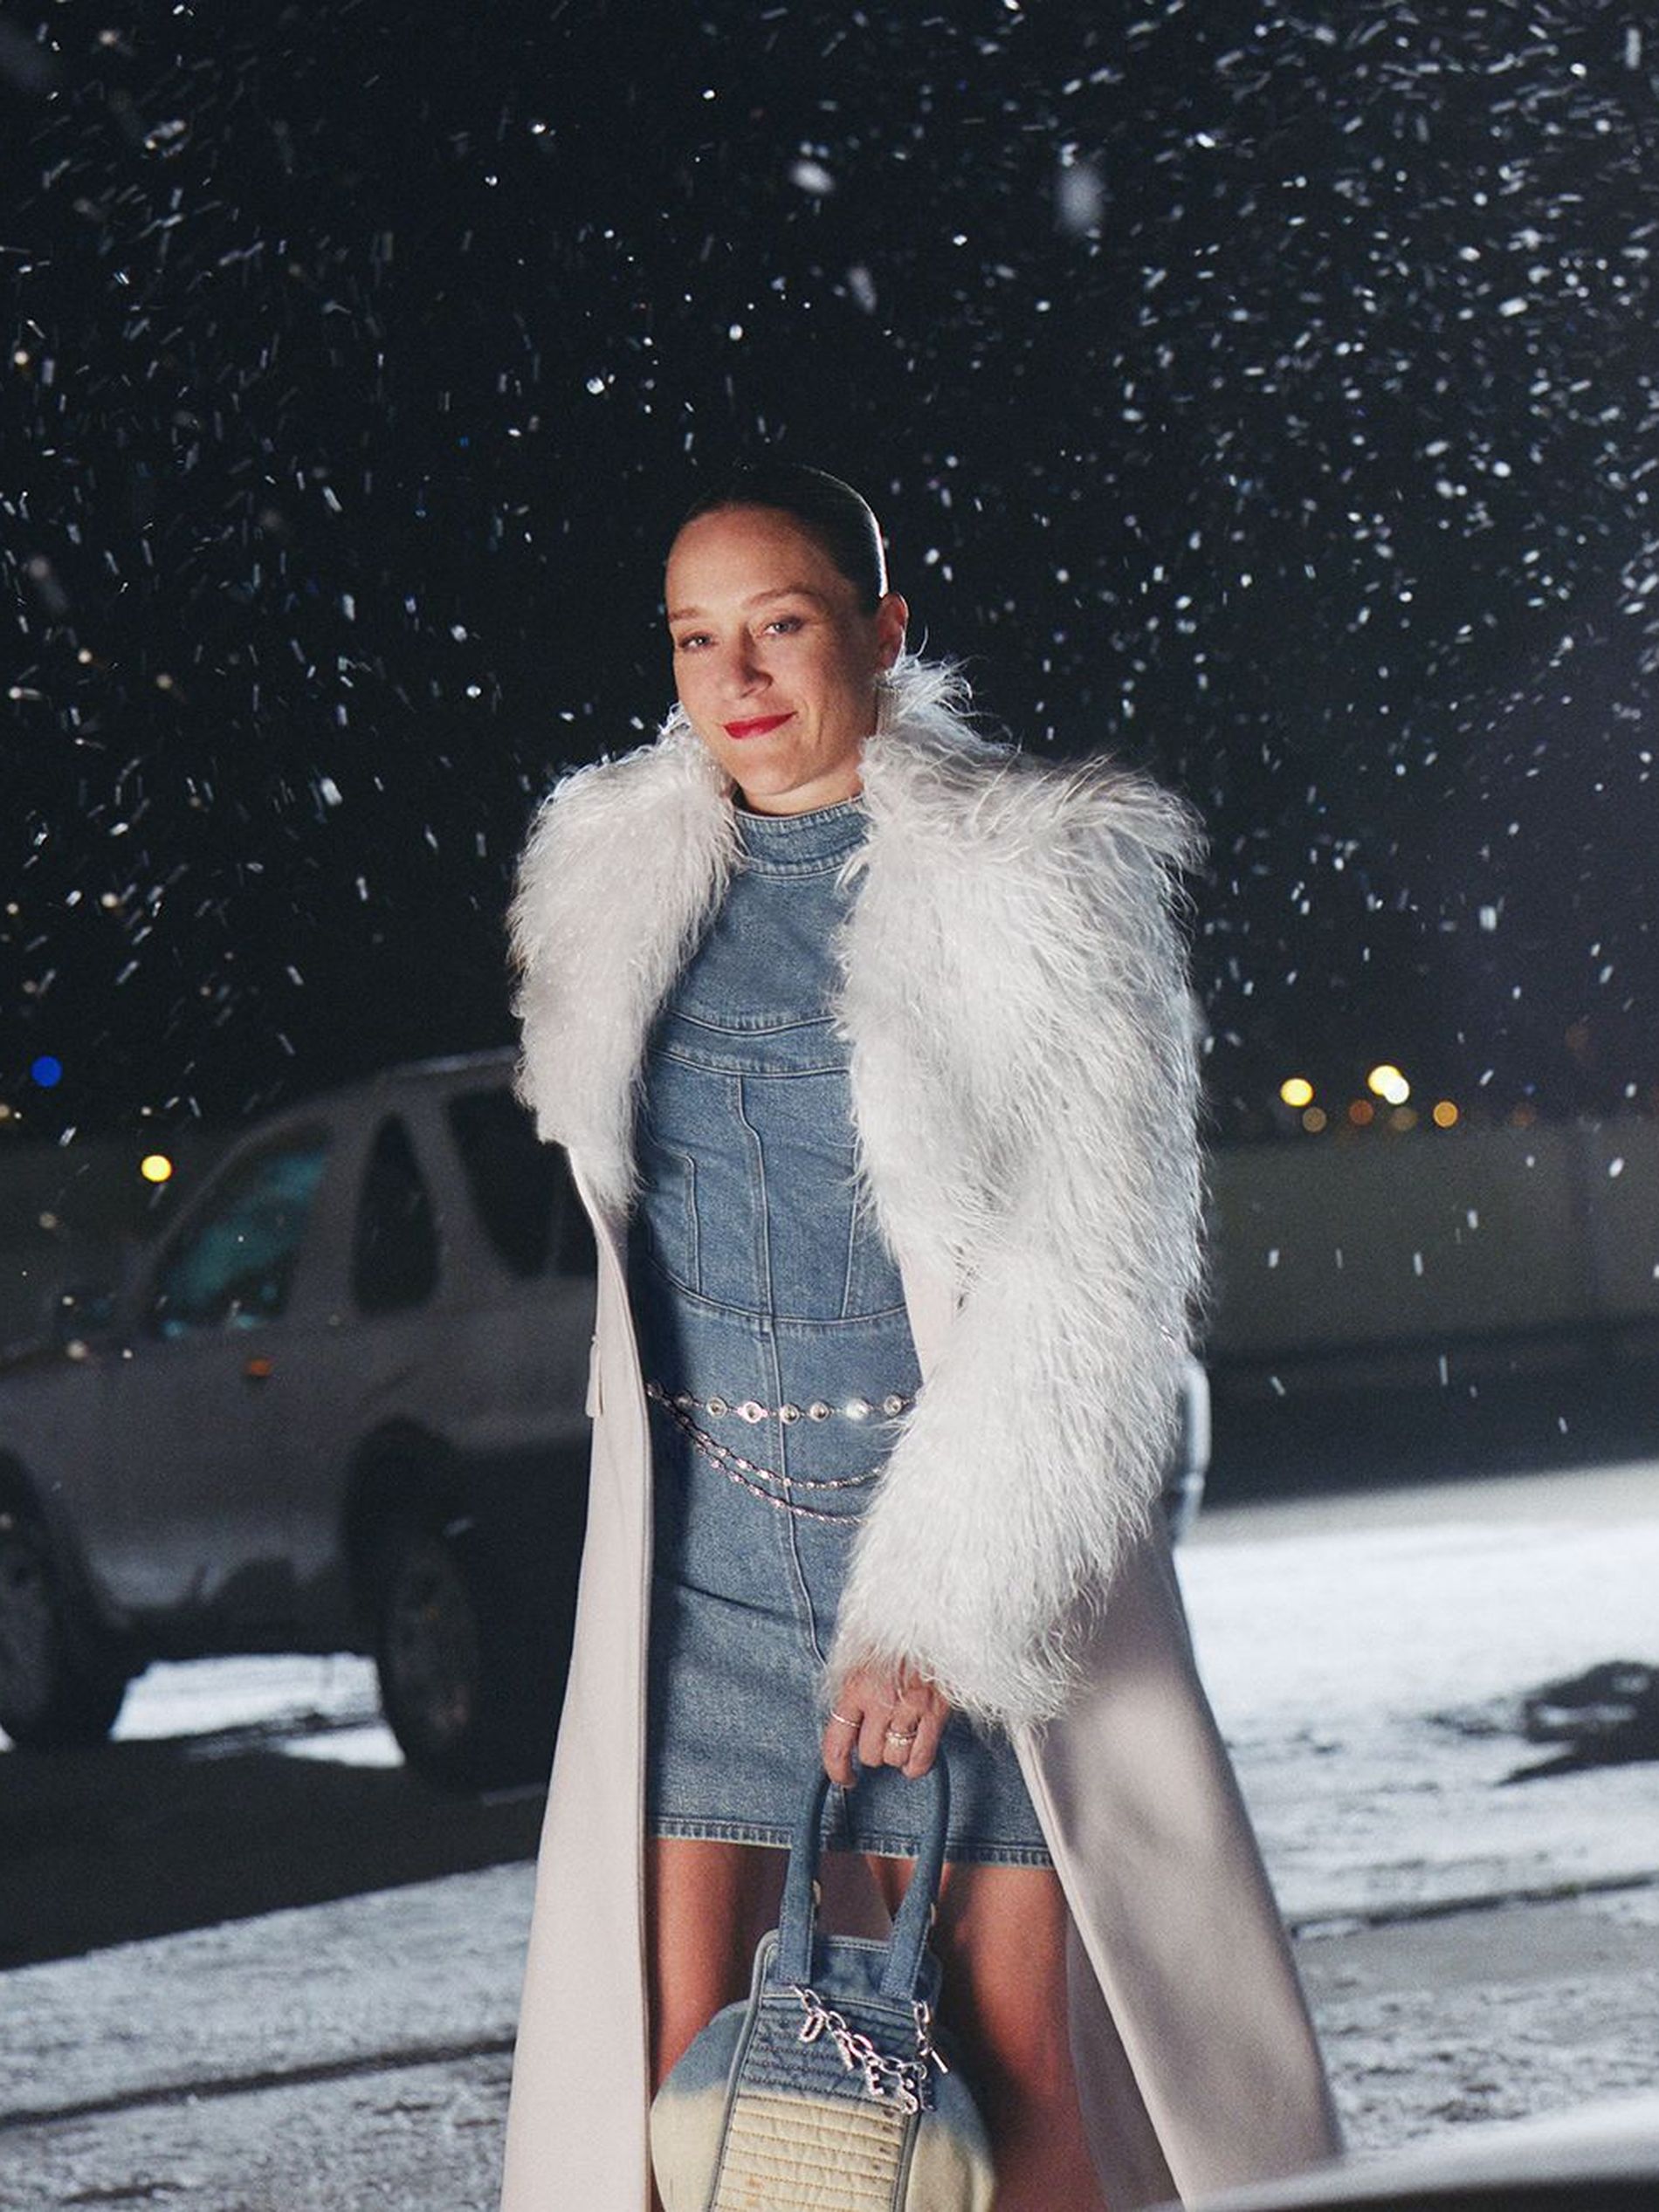 Forever It-girl Chloë Sevigny reveals her holiday dressing hacks